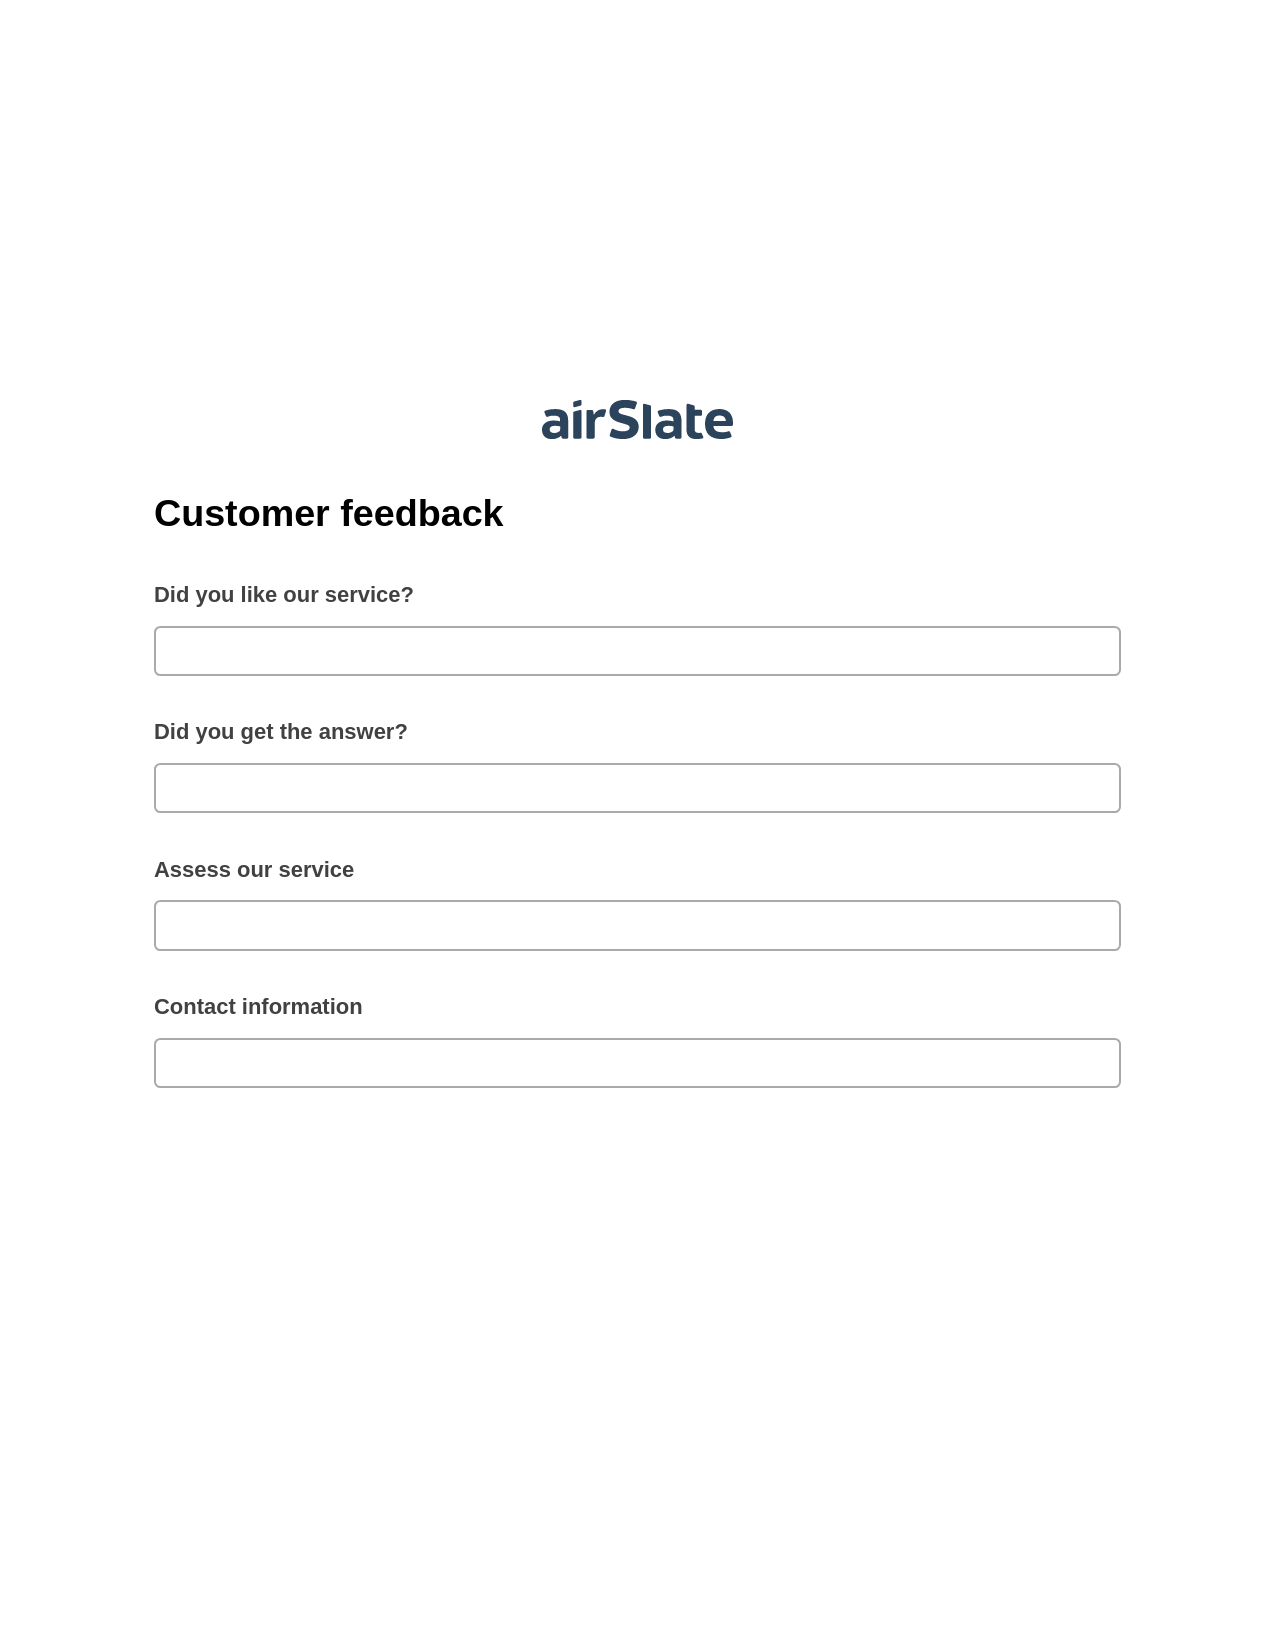 Customer feedback Pre-fill from Salesforce Records Bot, Update Salesforce Records Bot, Archive to Google Drive Bot